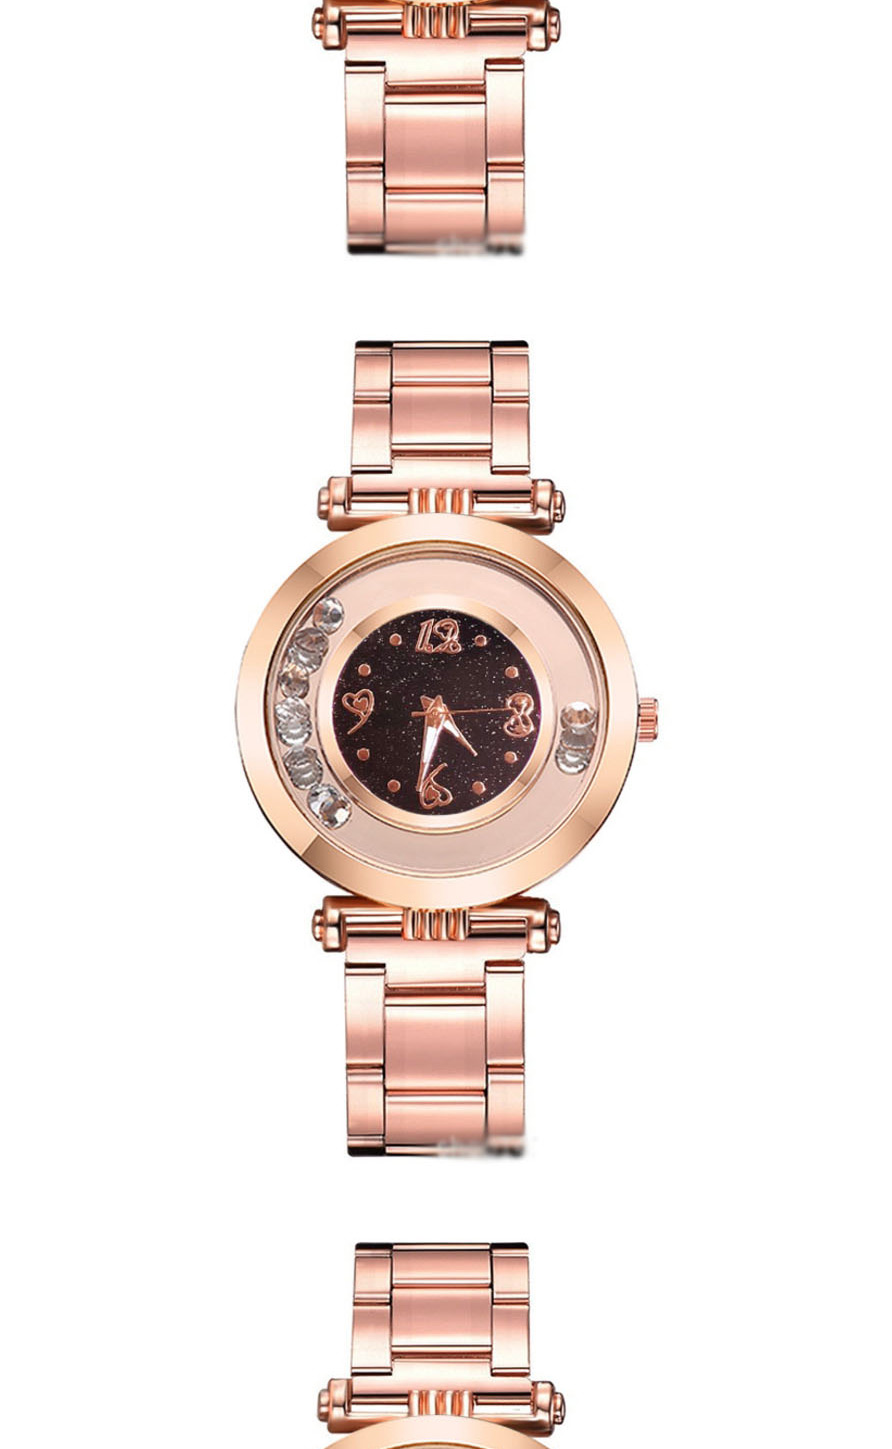 Fashion Purple Quartz Watch With Diamonds And Glitter,Ladies Watches